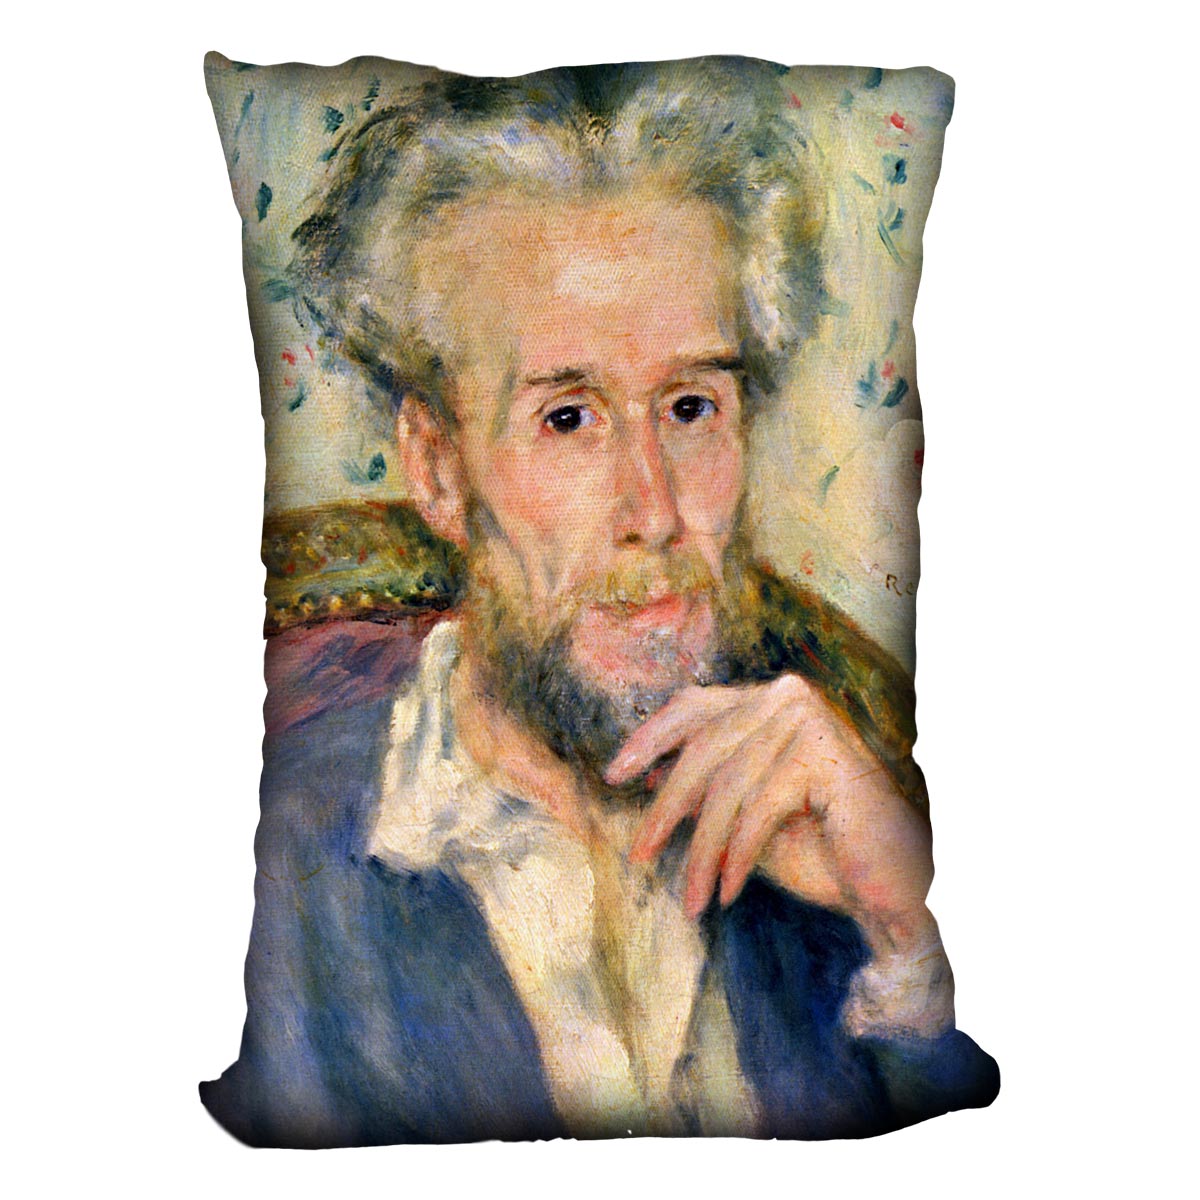 Portrait of a man by Renoir Cushion